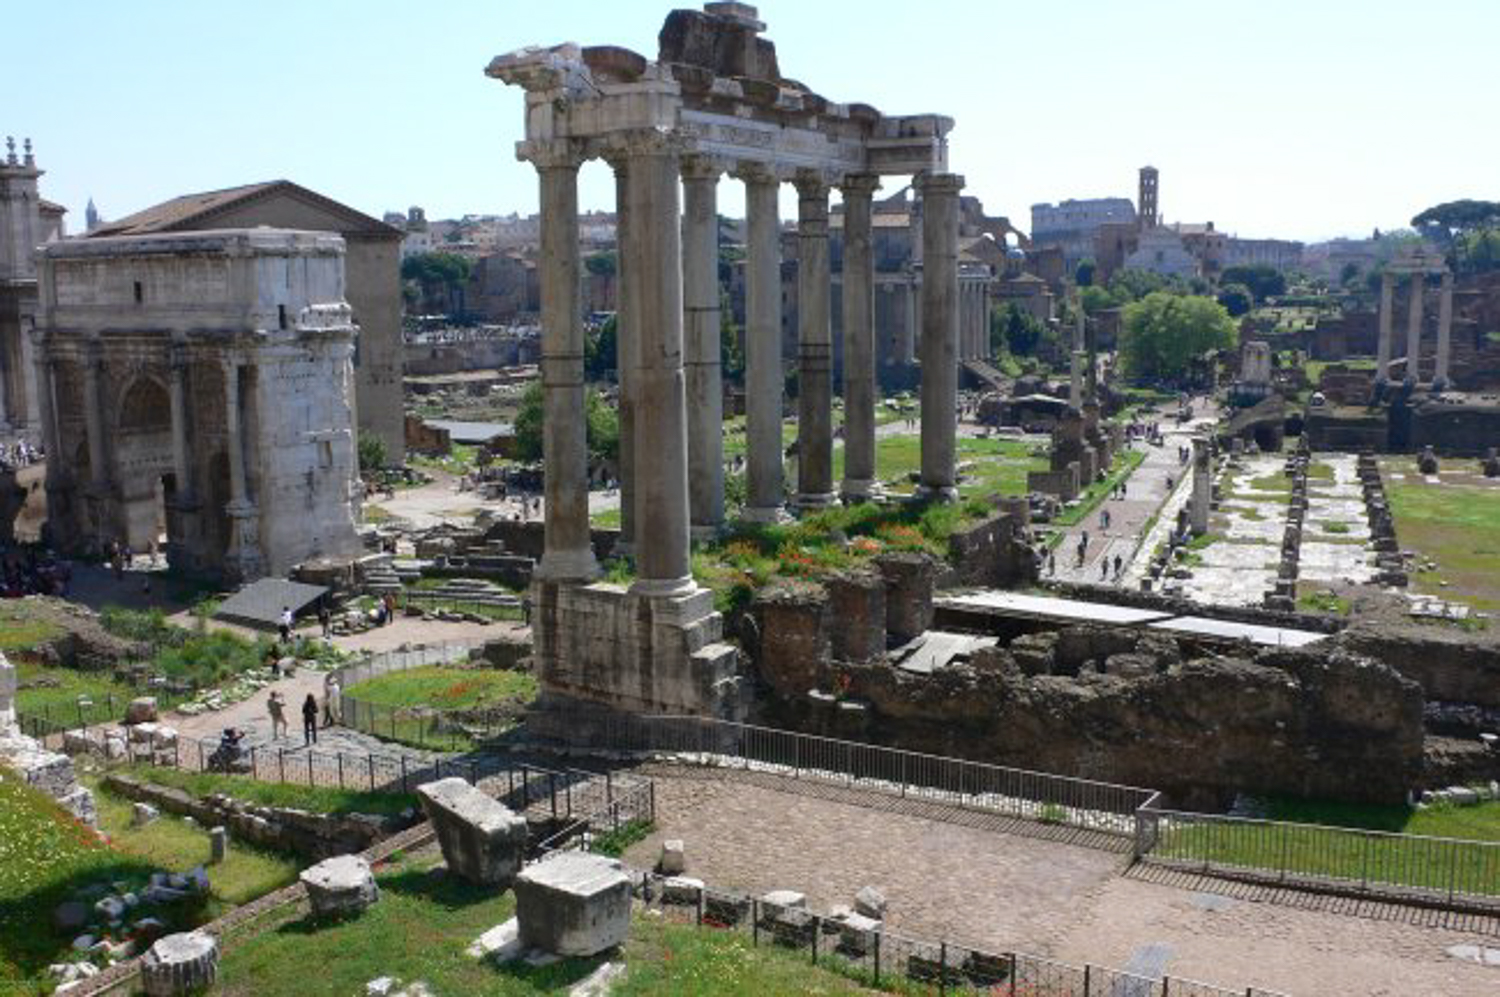 The Forum Rome